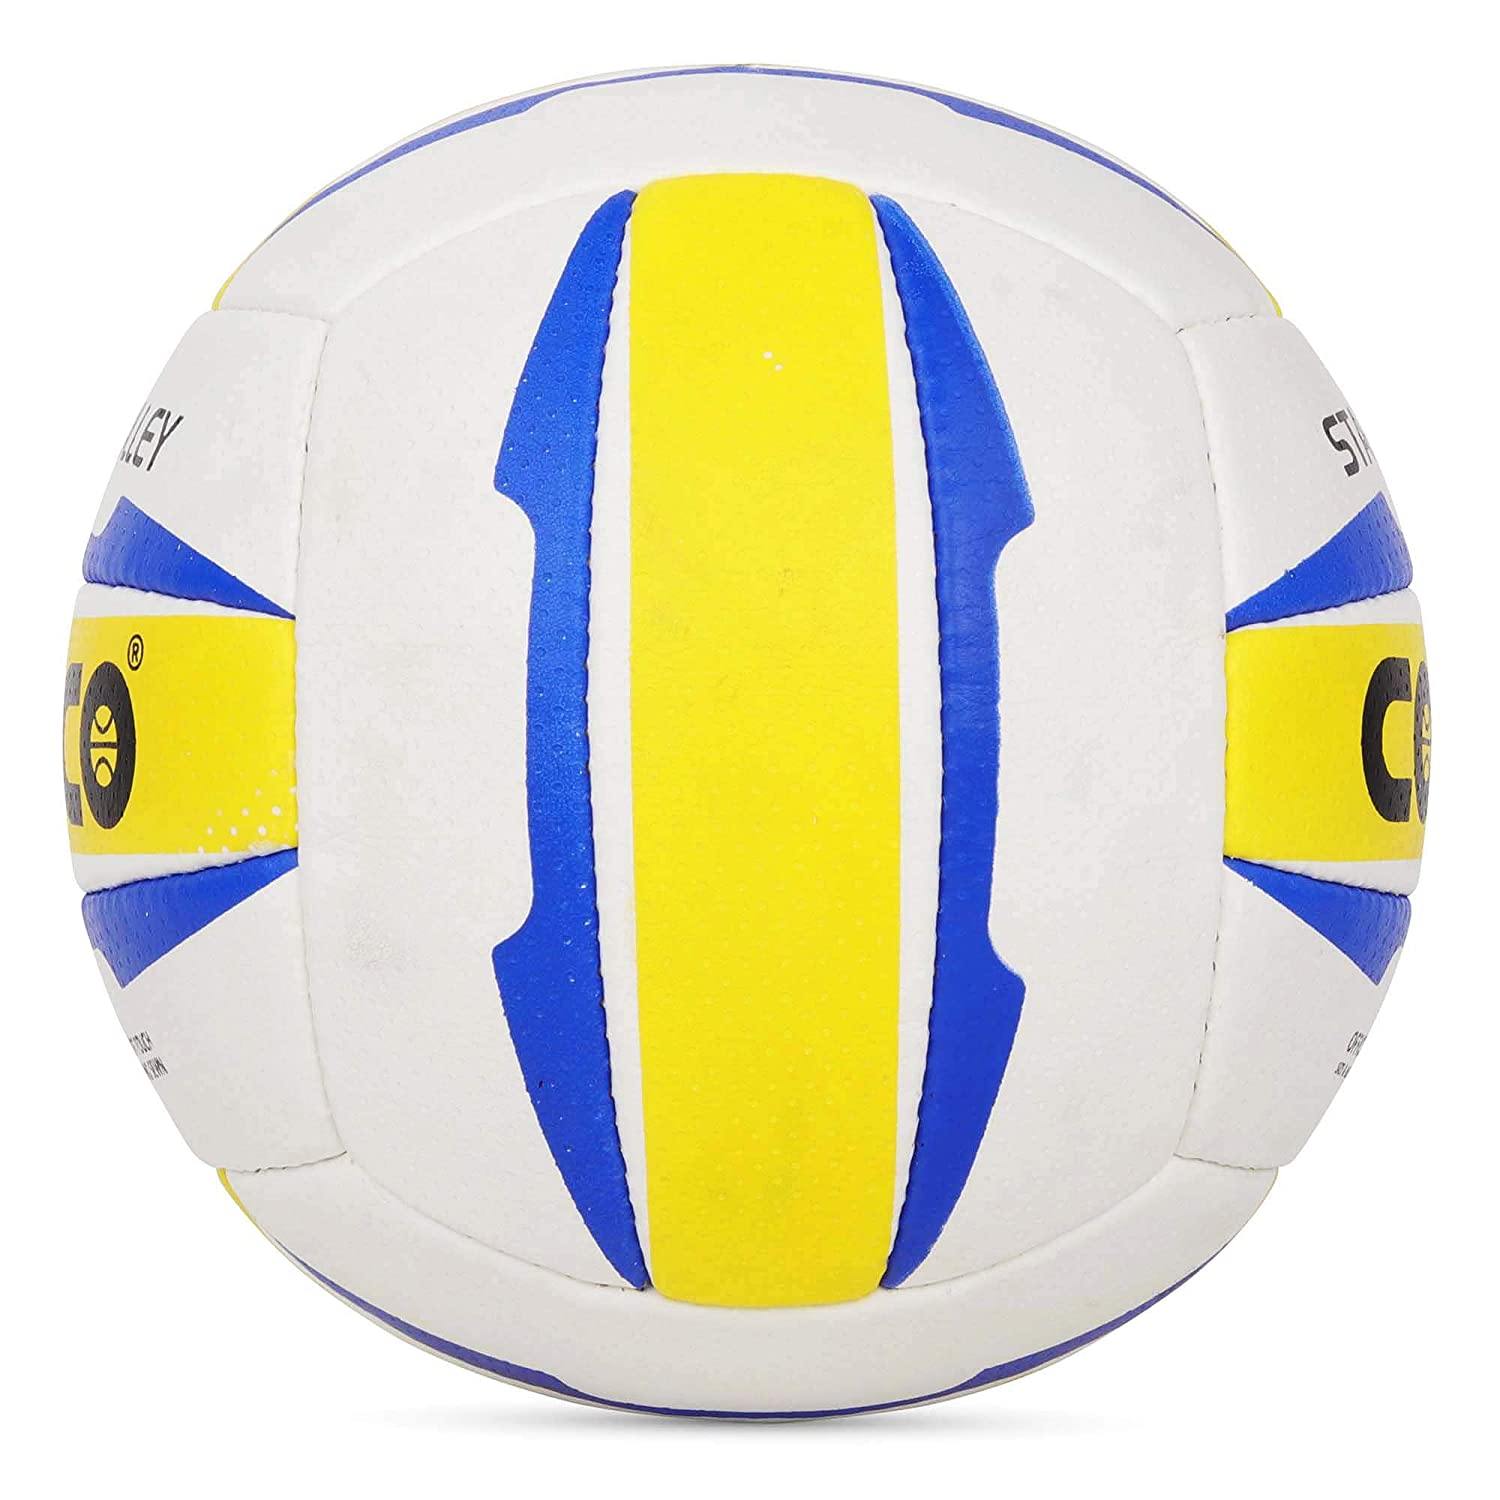 Cosco Star Volley Volleyball, Size 4 - Best Price online Prokicksports.com